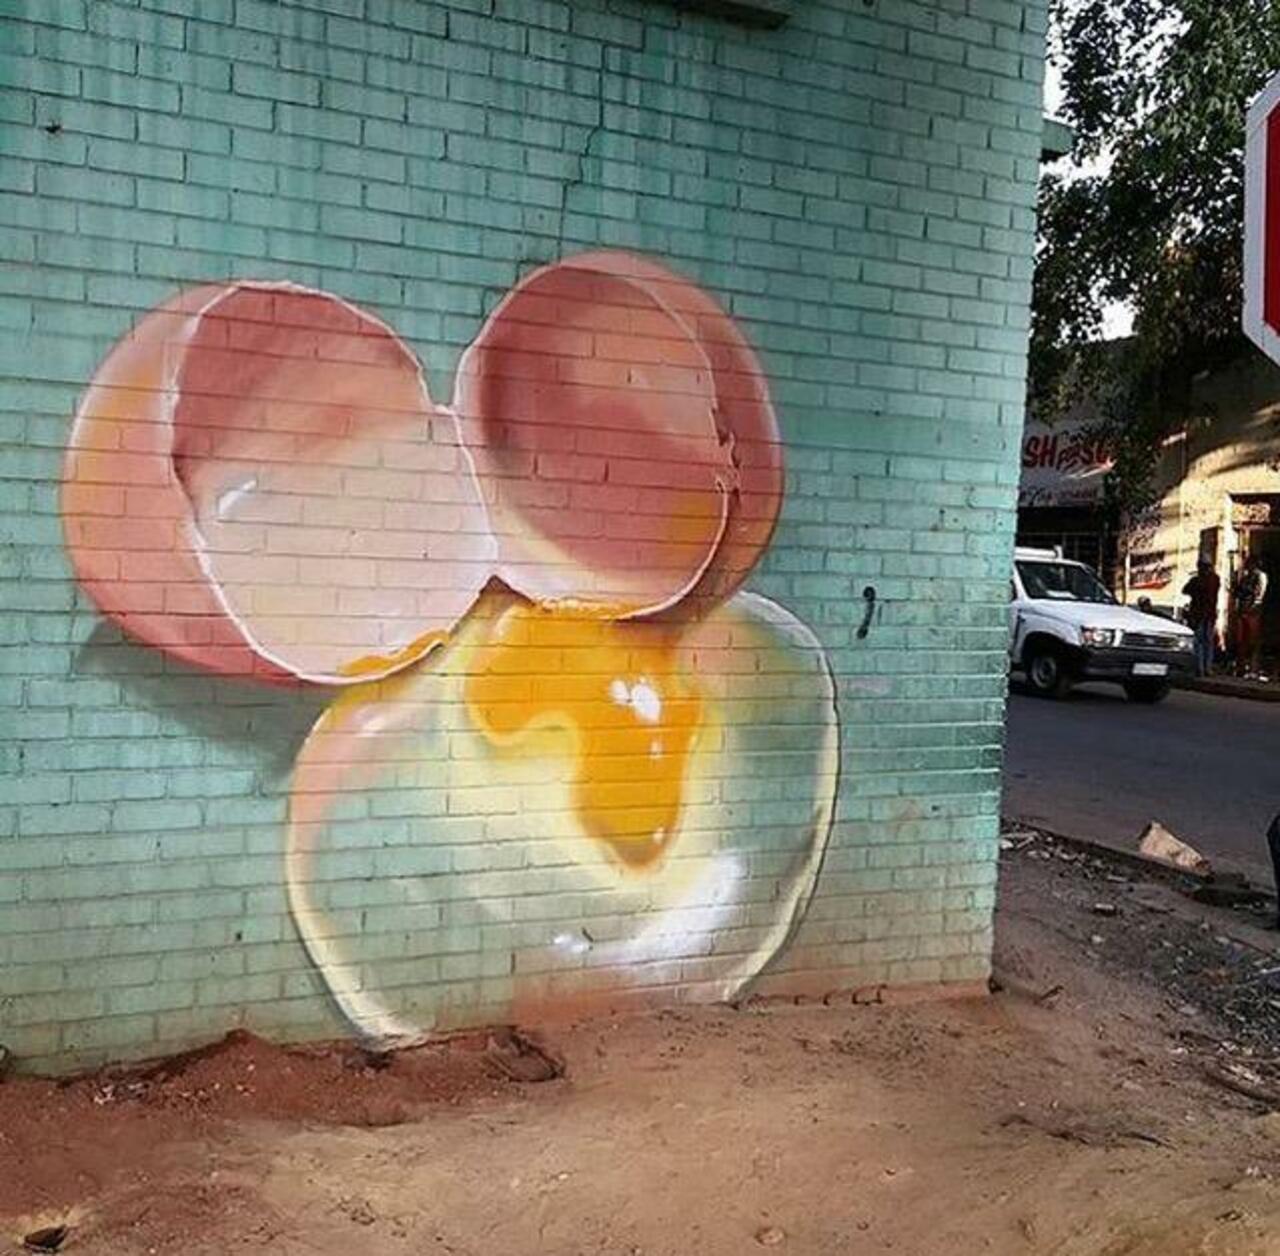 Street Art by falco1 in Johannesburg SA  

#art #graffiti #mural #streetart http://t.co/xTqjPWs6sH